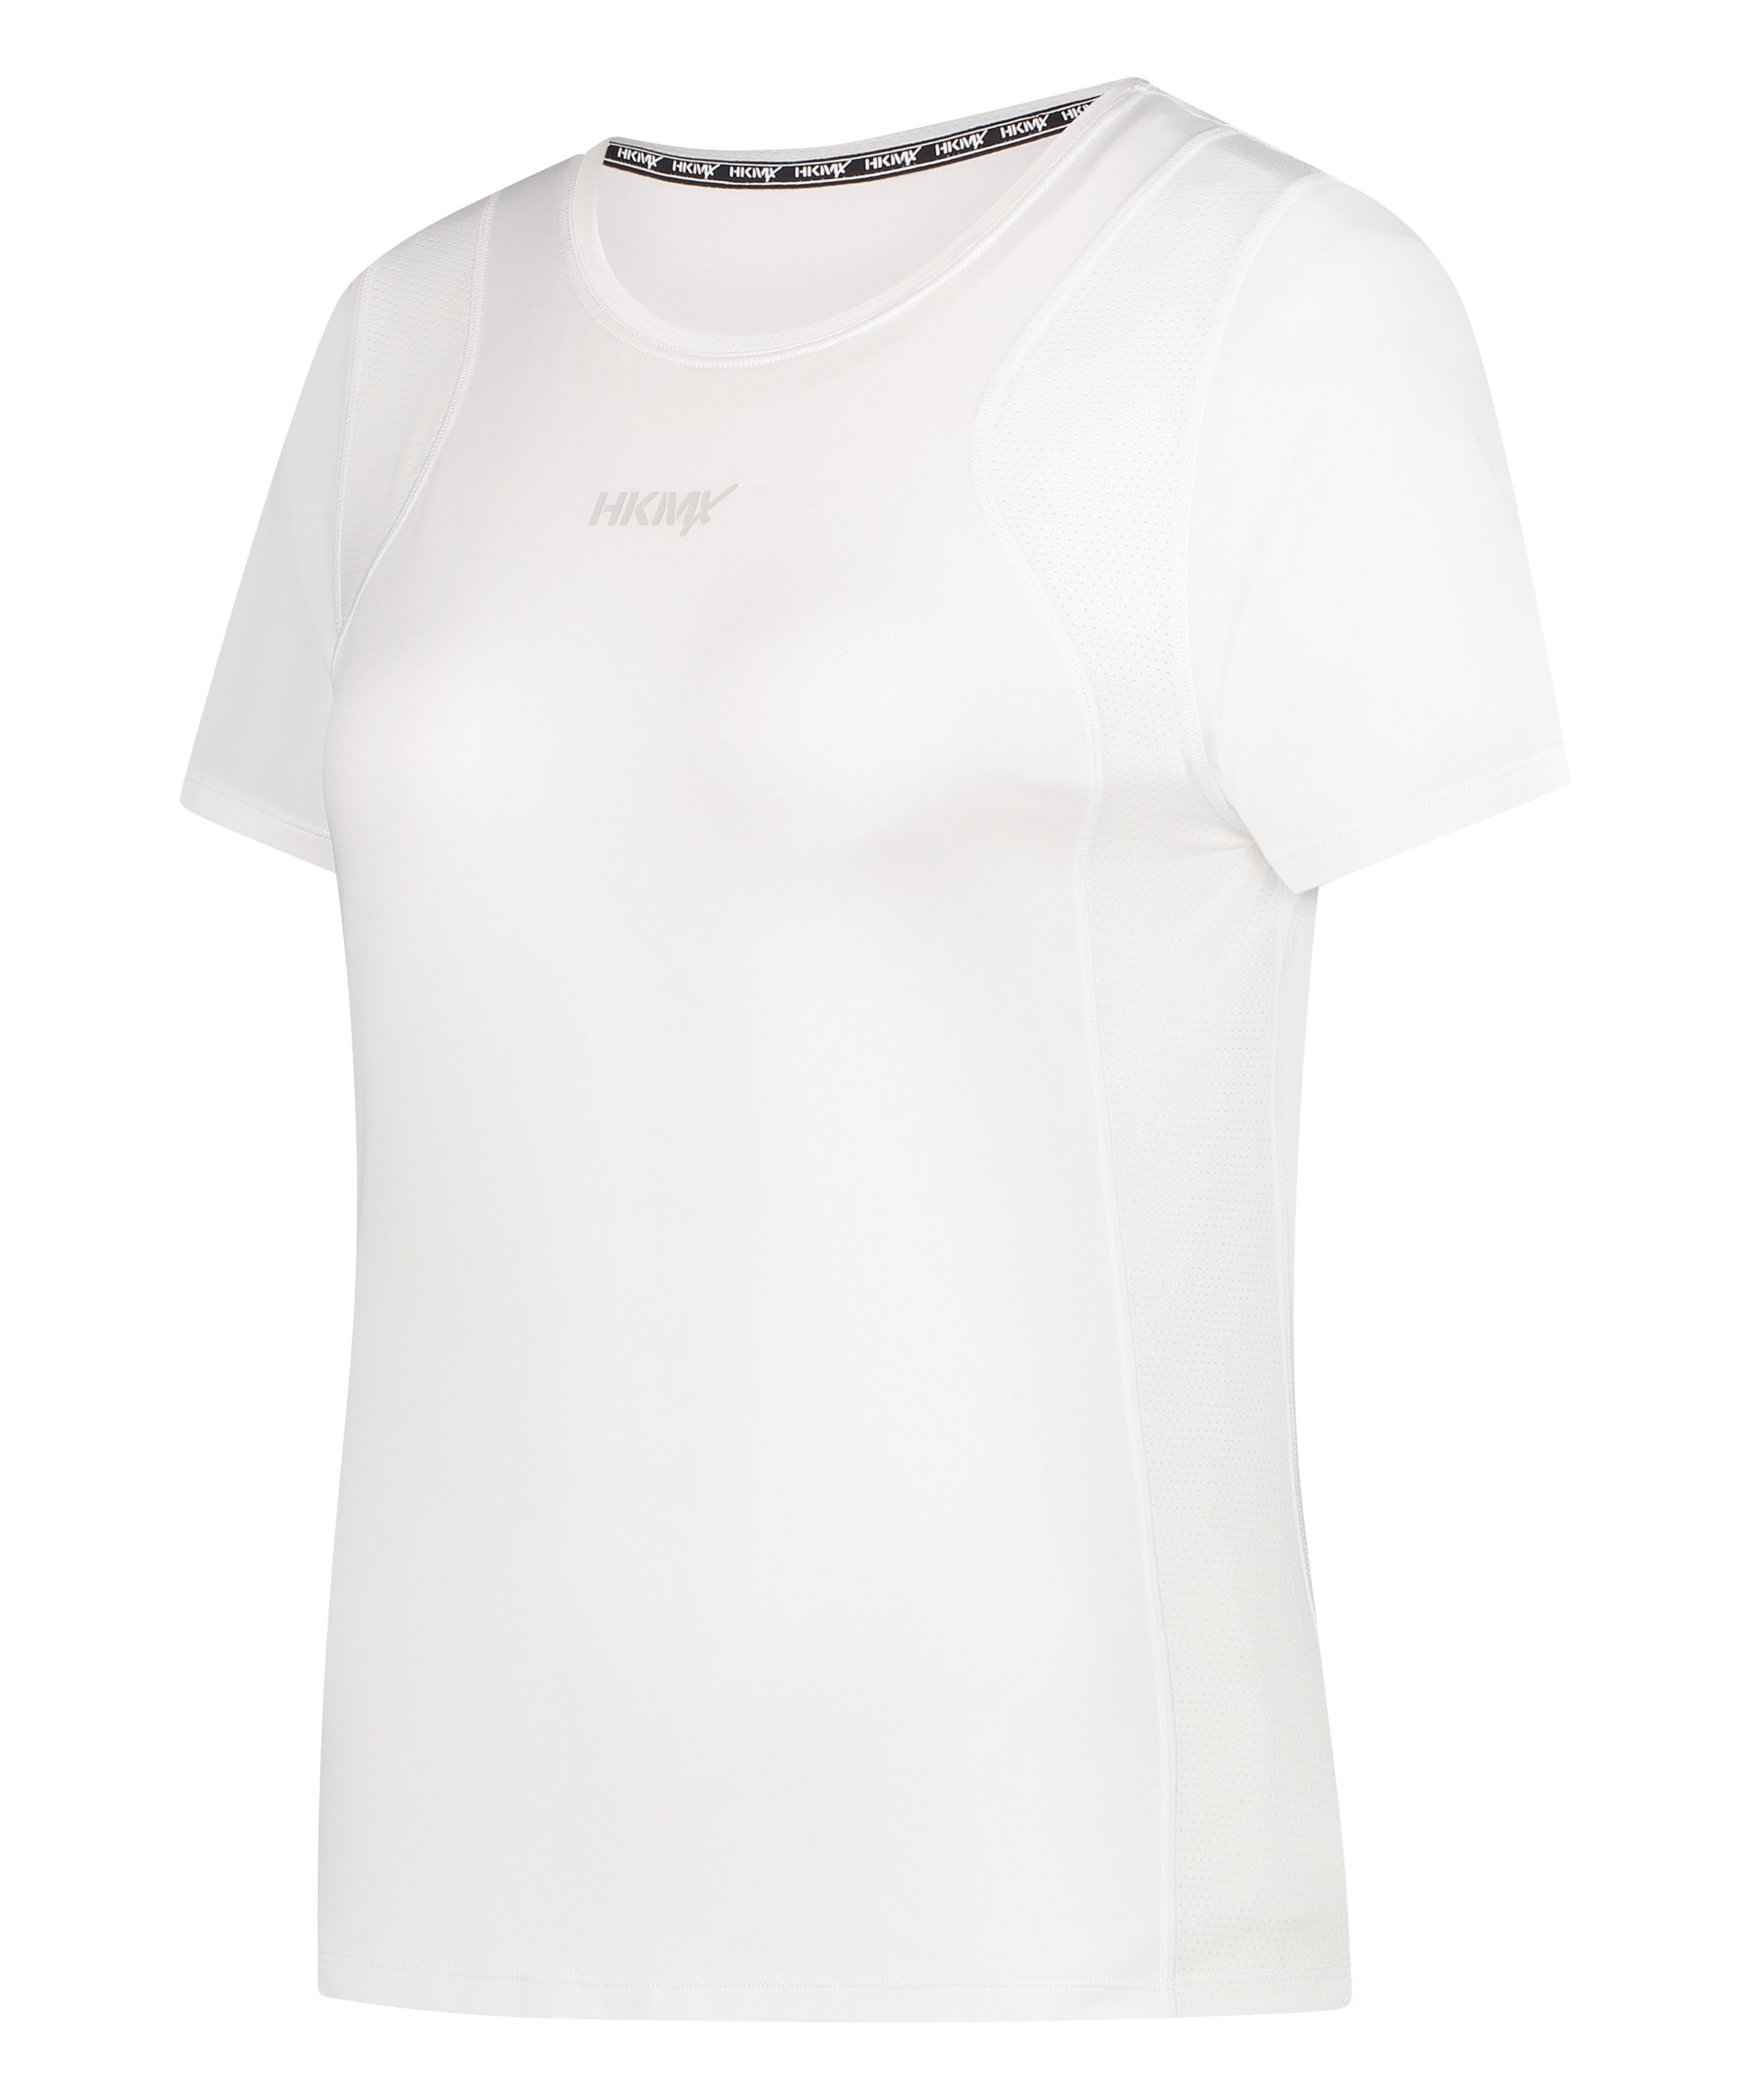 HKMX Sport schmal geschnittenes T-Shirt, Weiß, main